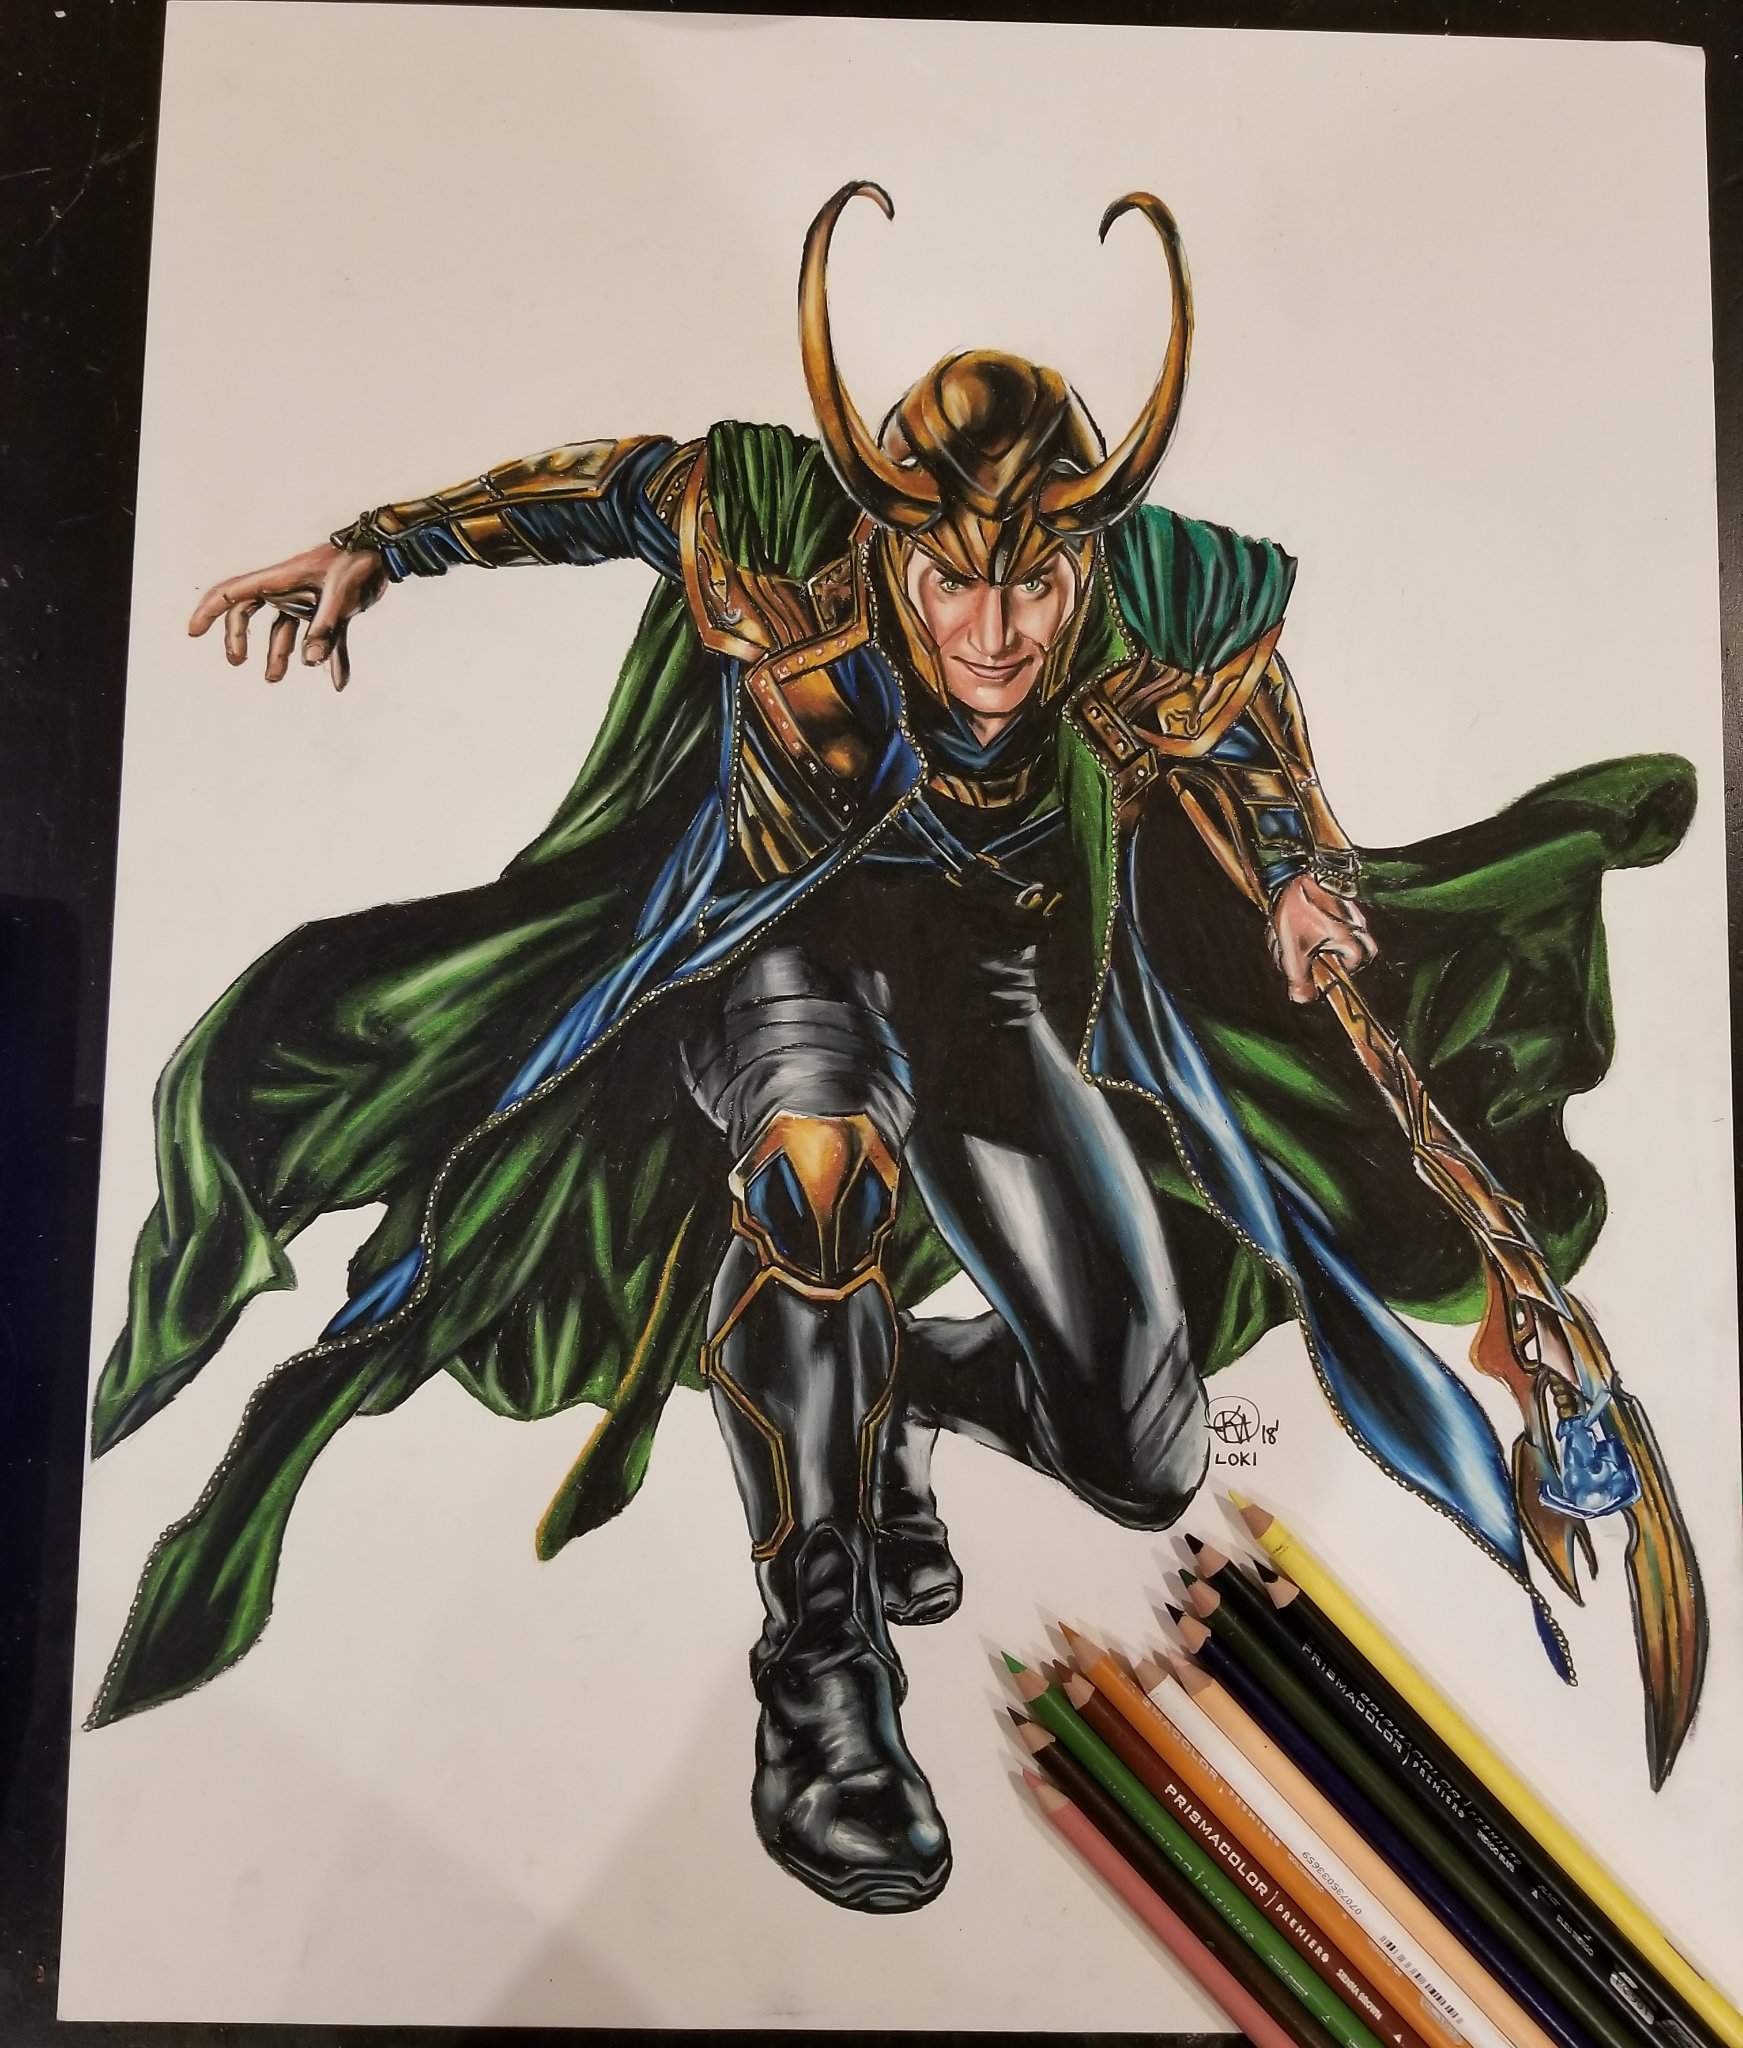 Loki God of Mischief